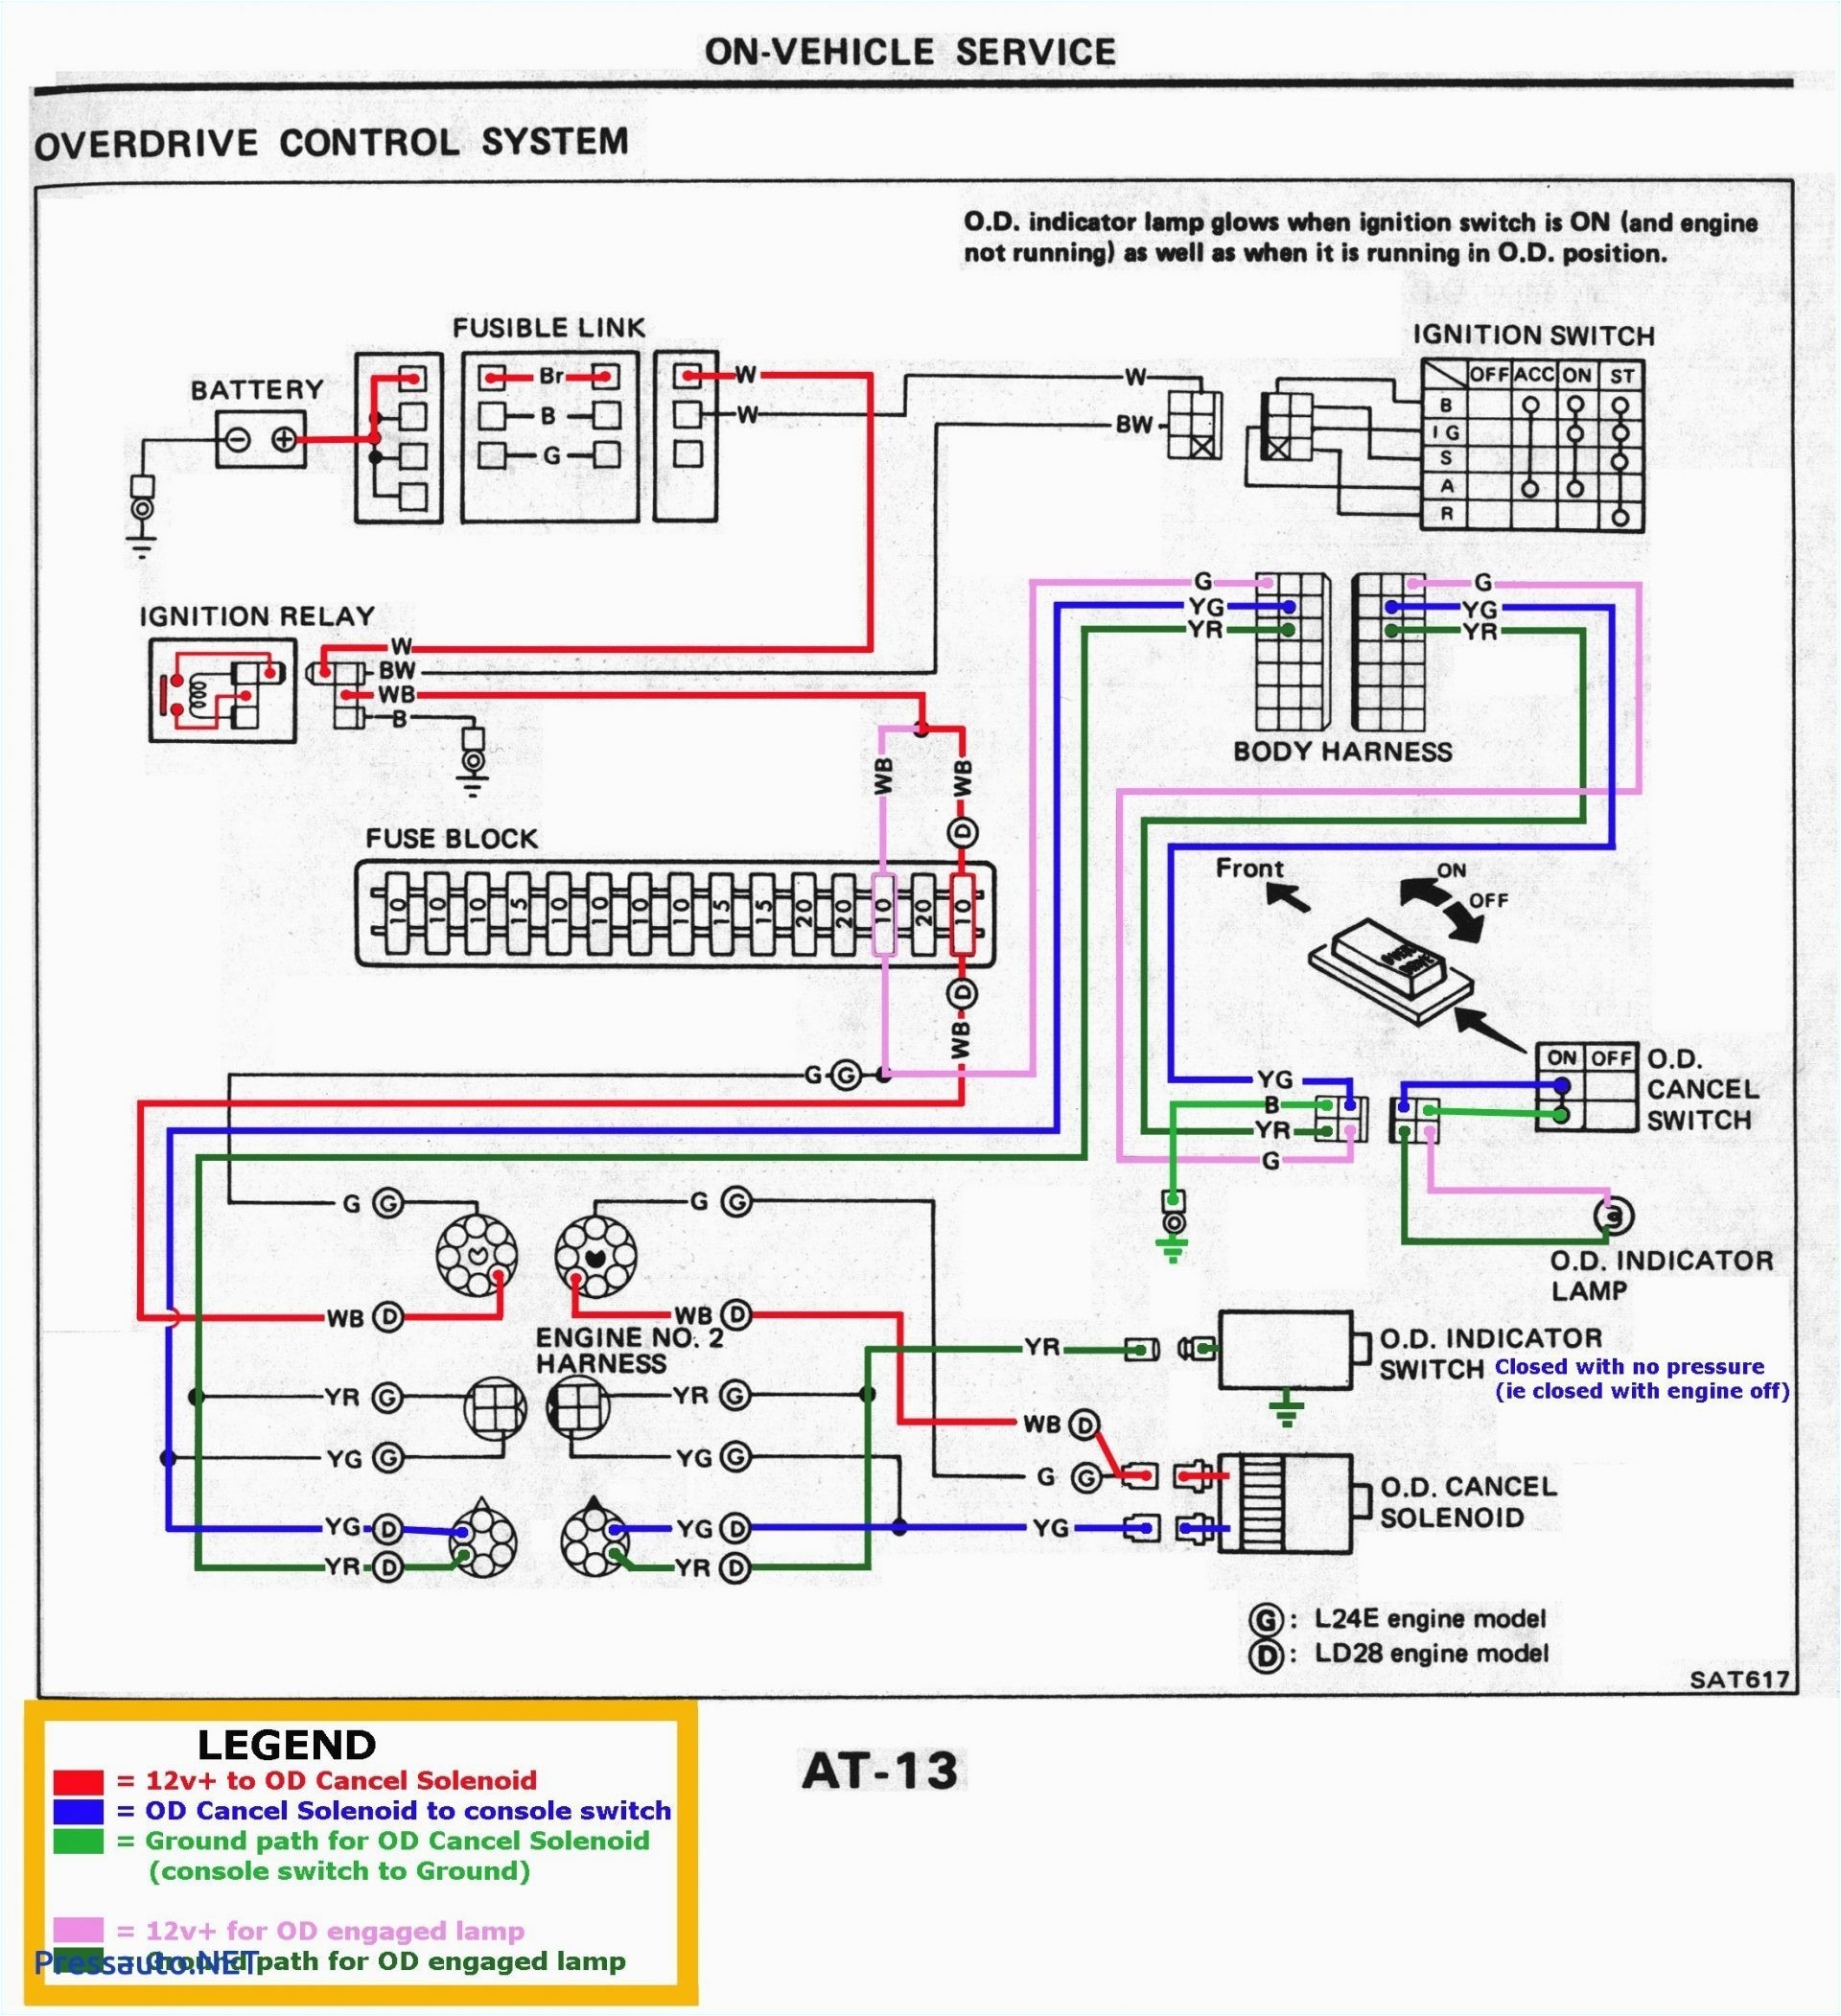 navigation light switch wiring diagram save running light switch simple diagram example electrical wiring